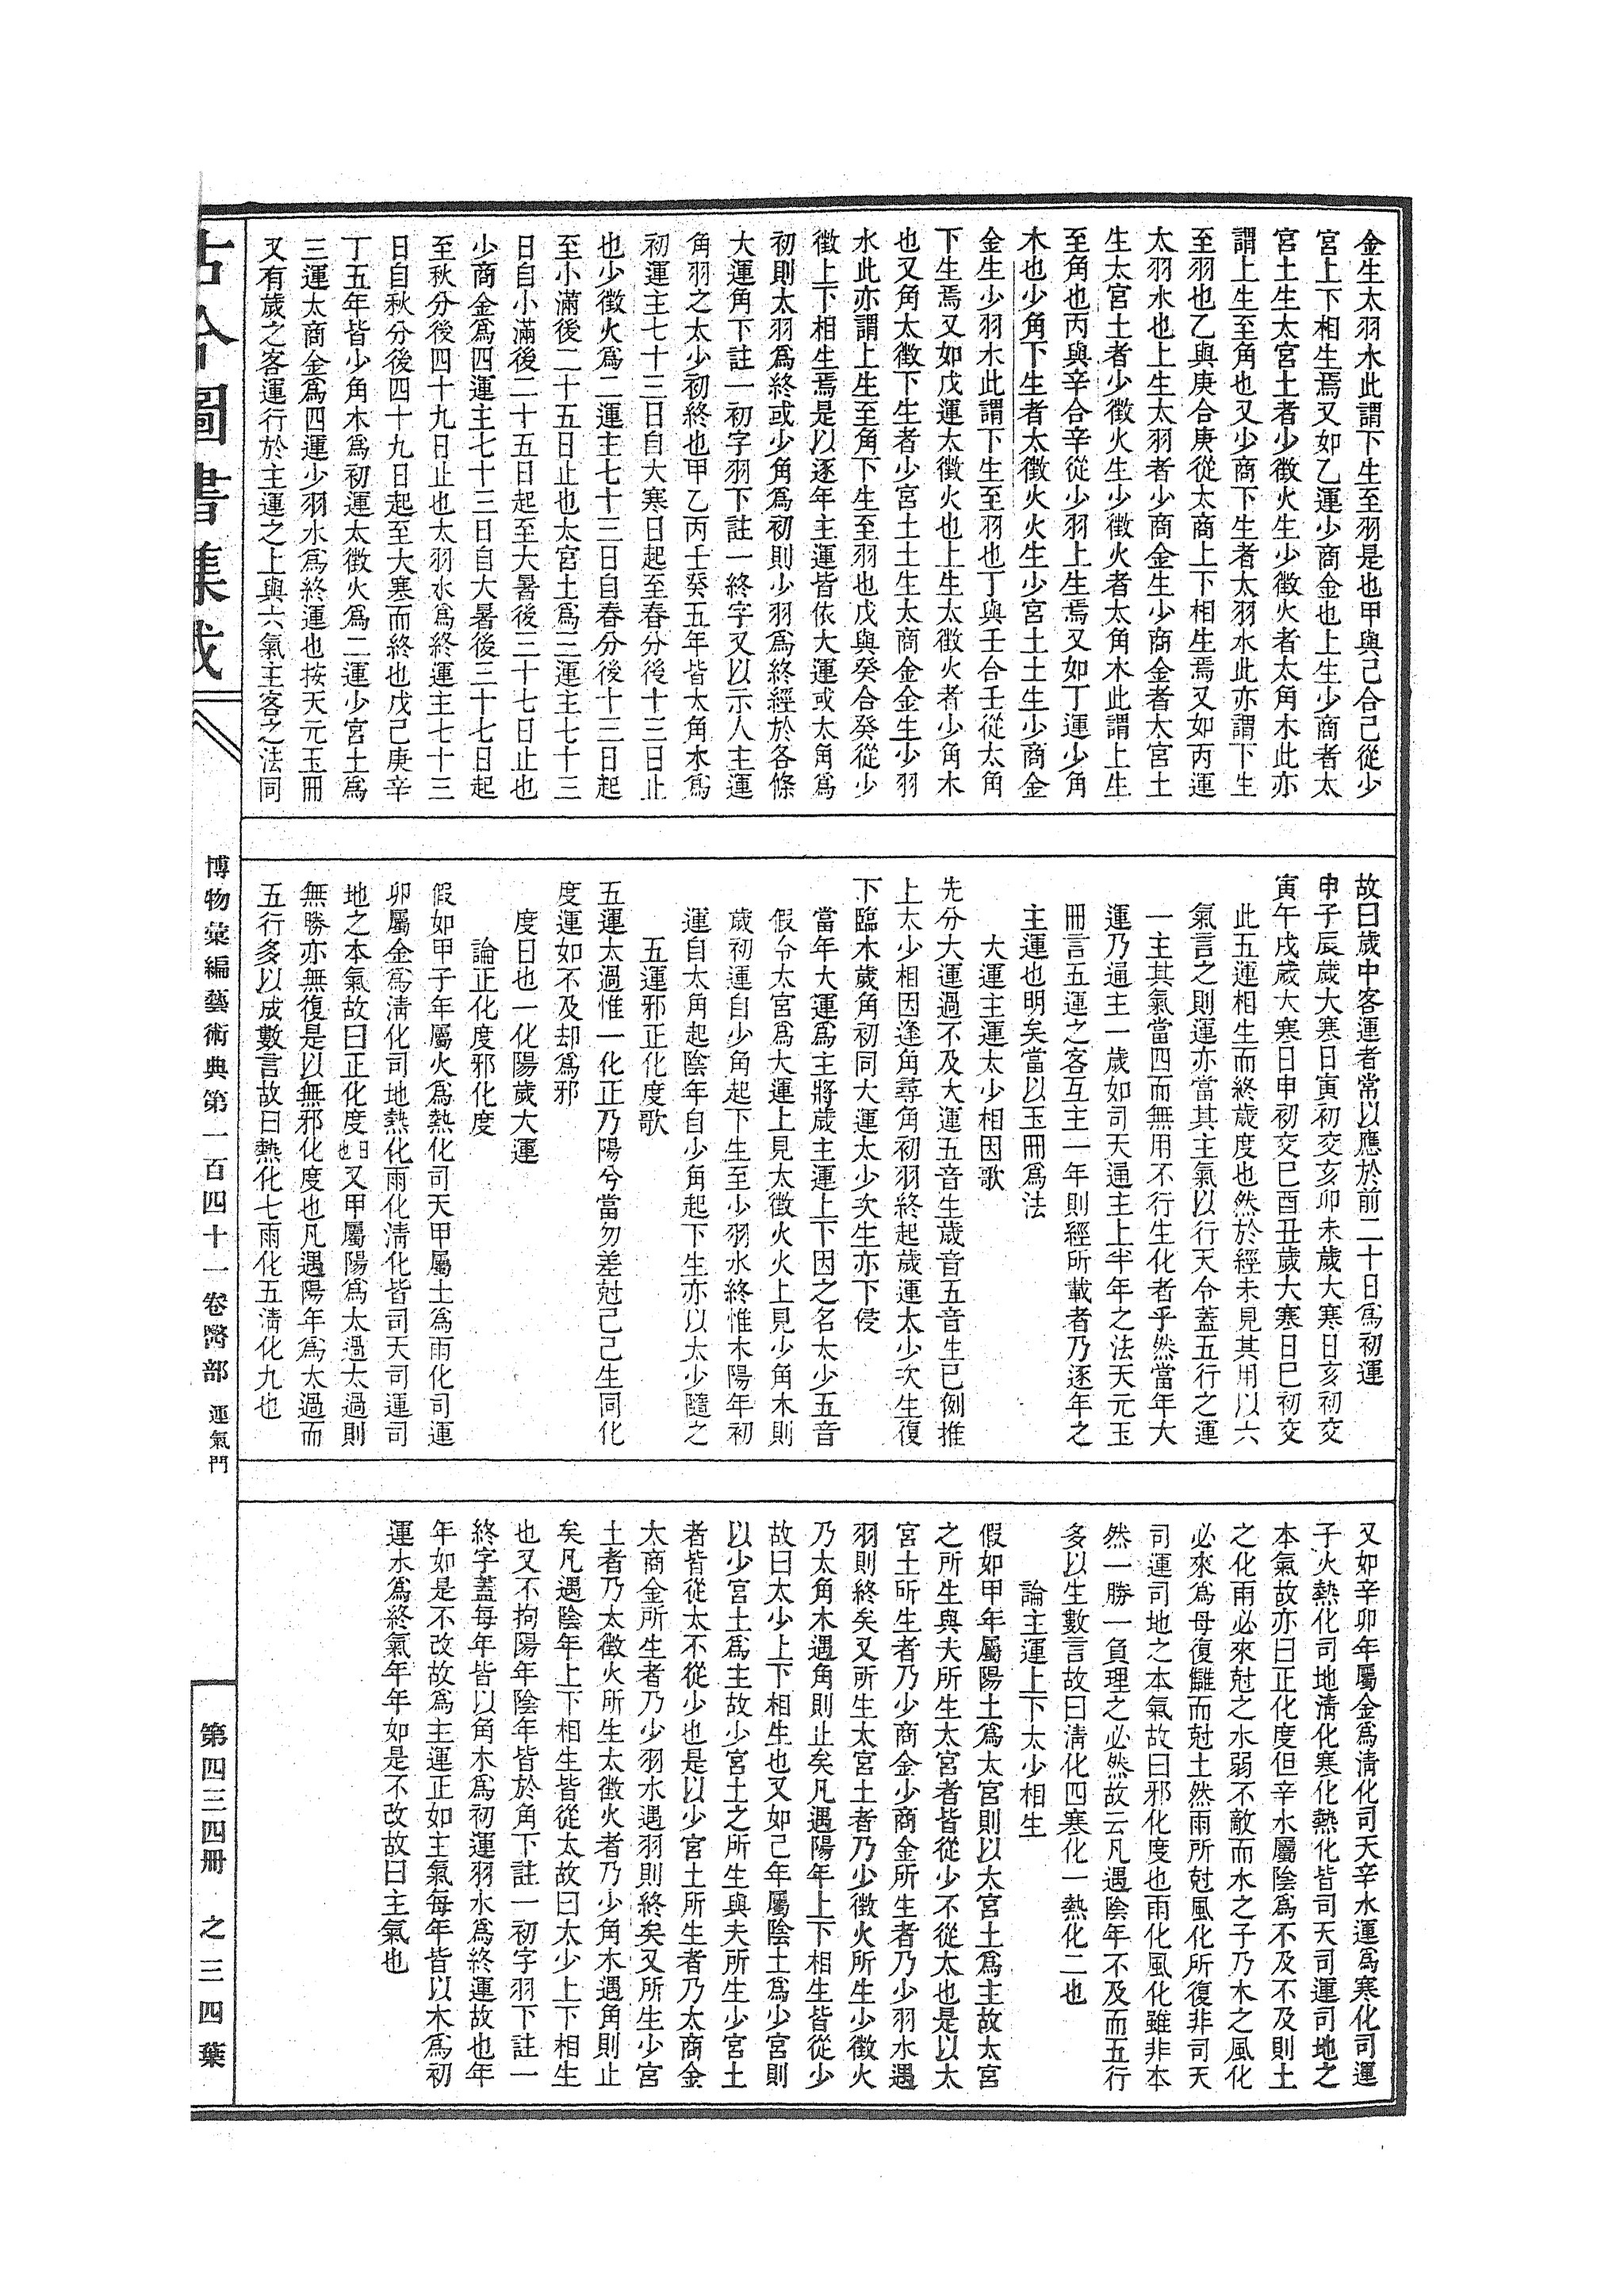 Page Gujin Tushu Jicheng Volume 434 1700 1725 Djvu 68 维基文库 自由的图书馆